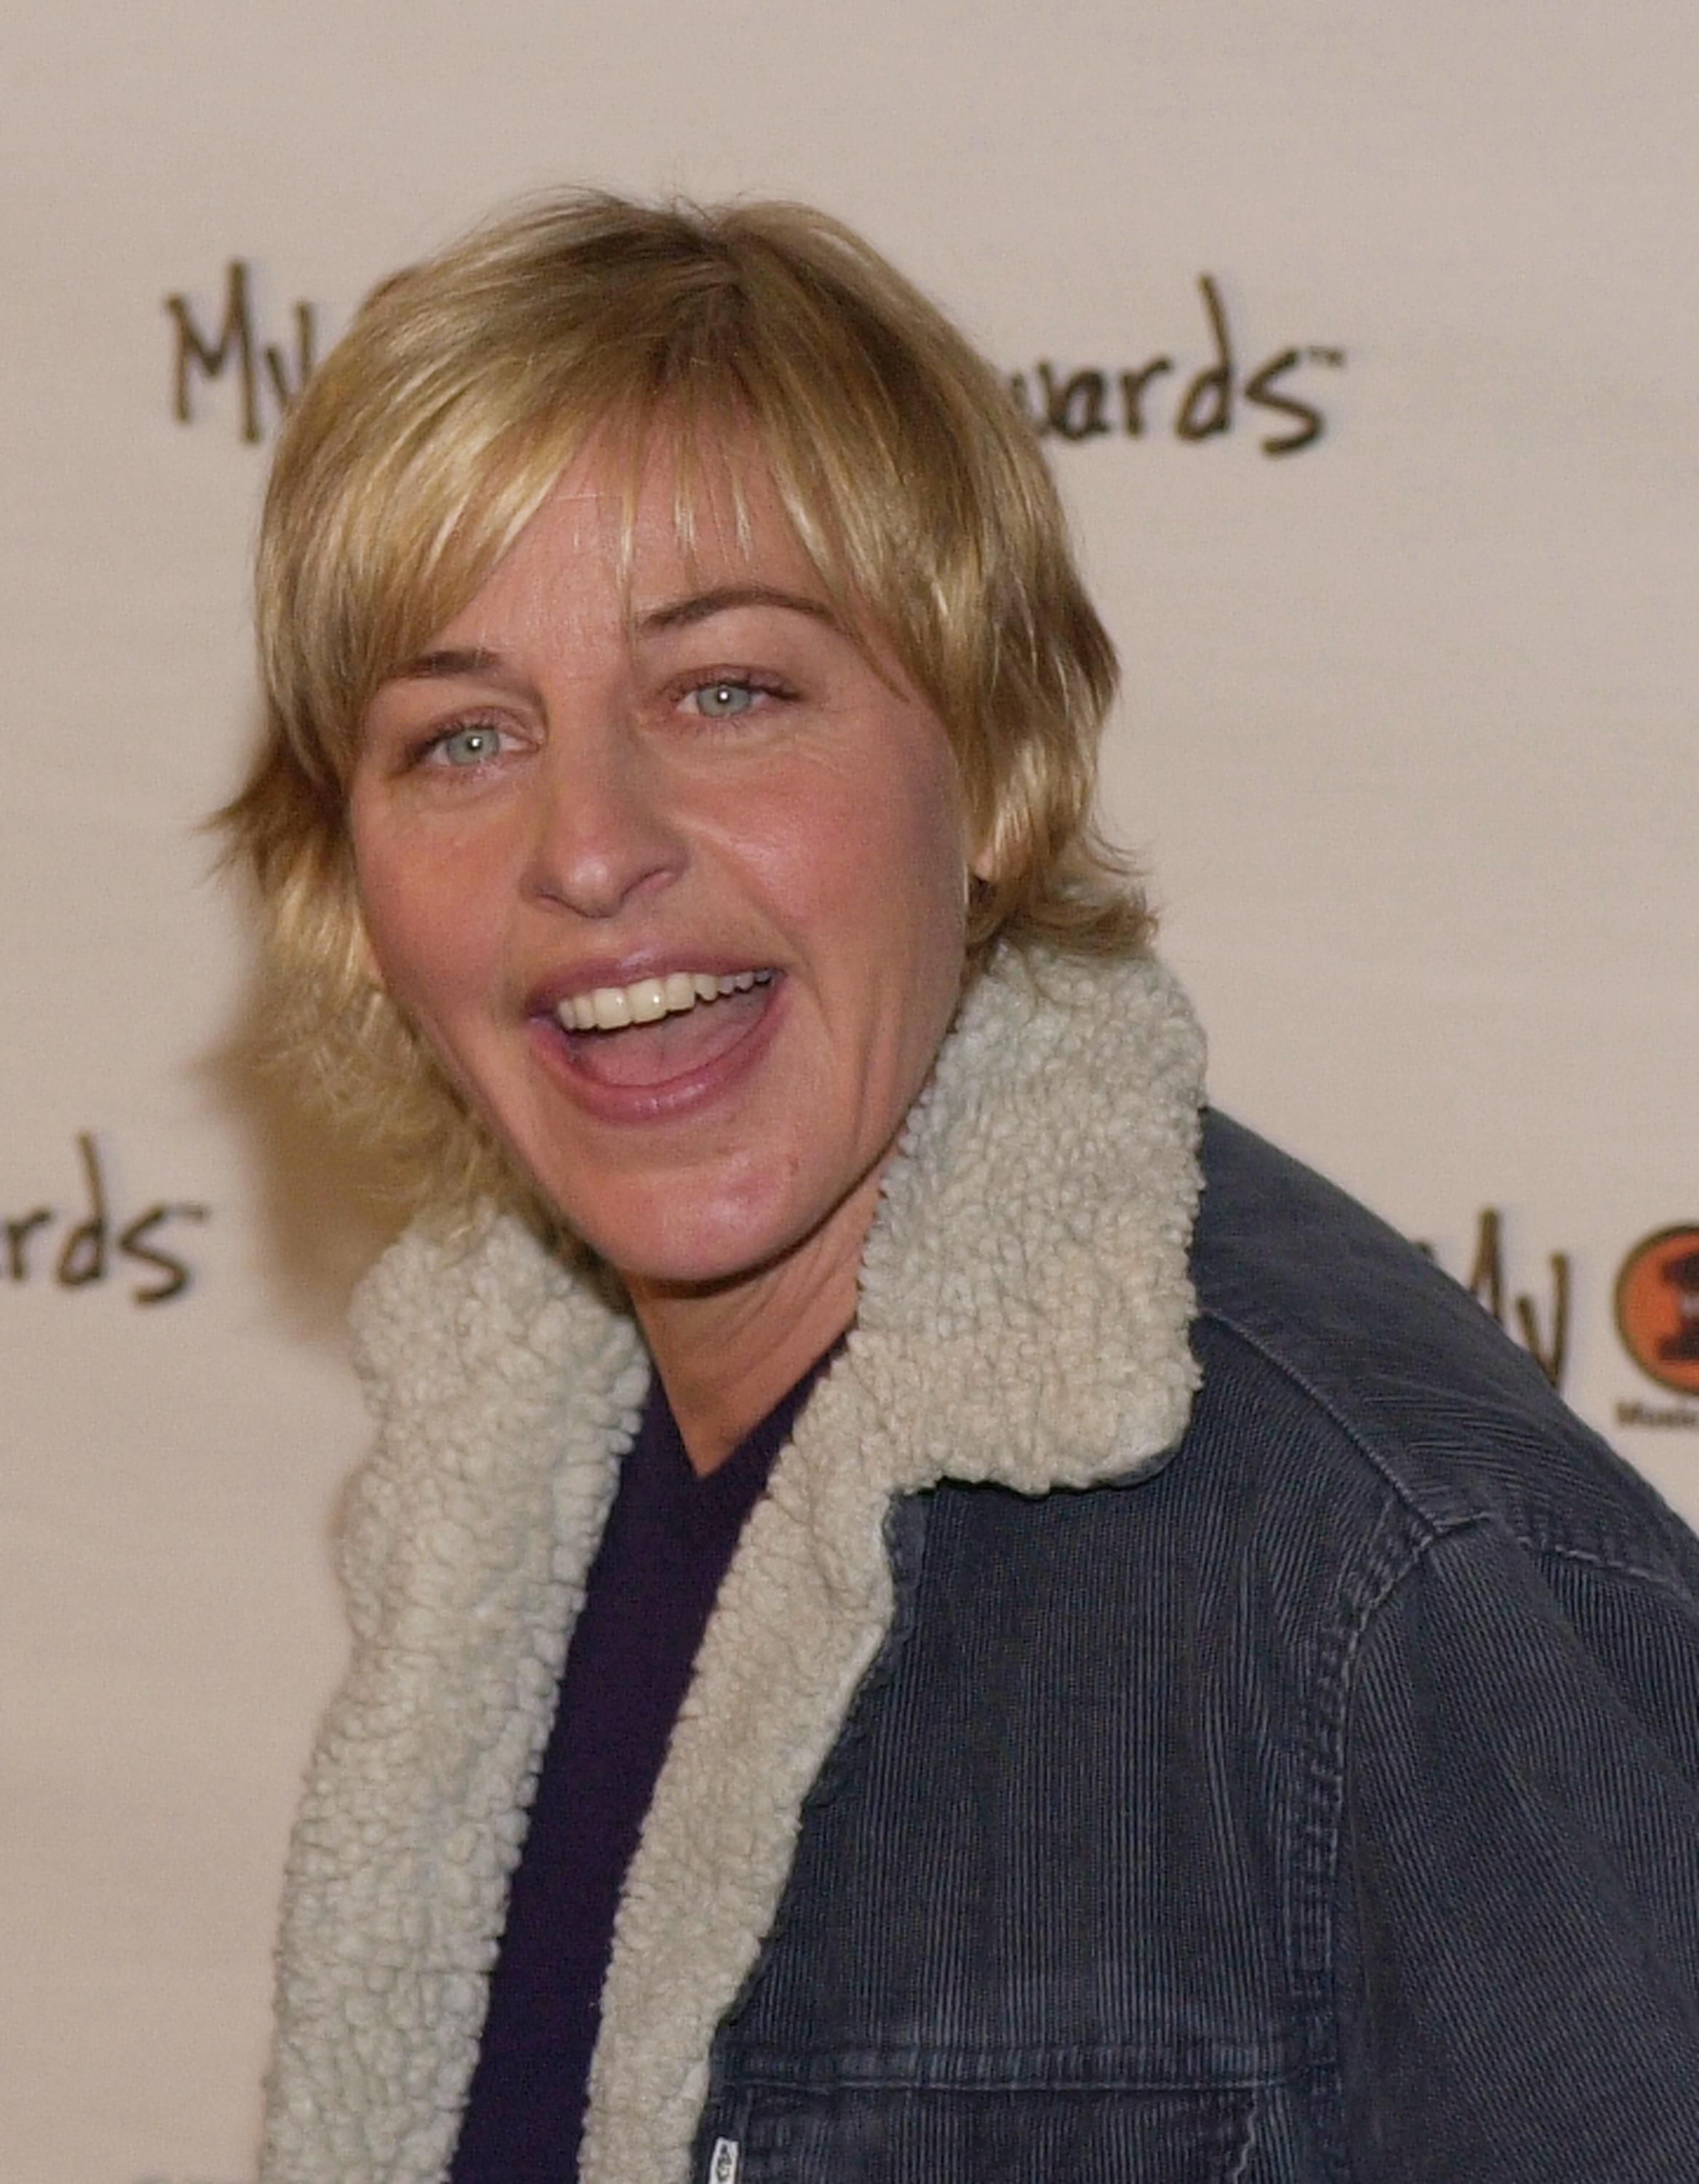  Ellen DeGeneres at the "My VH1 Music Awards" on November 30, 2000. | Photo: Getty Images